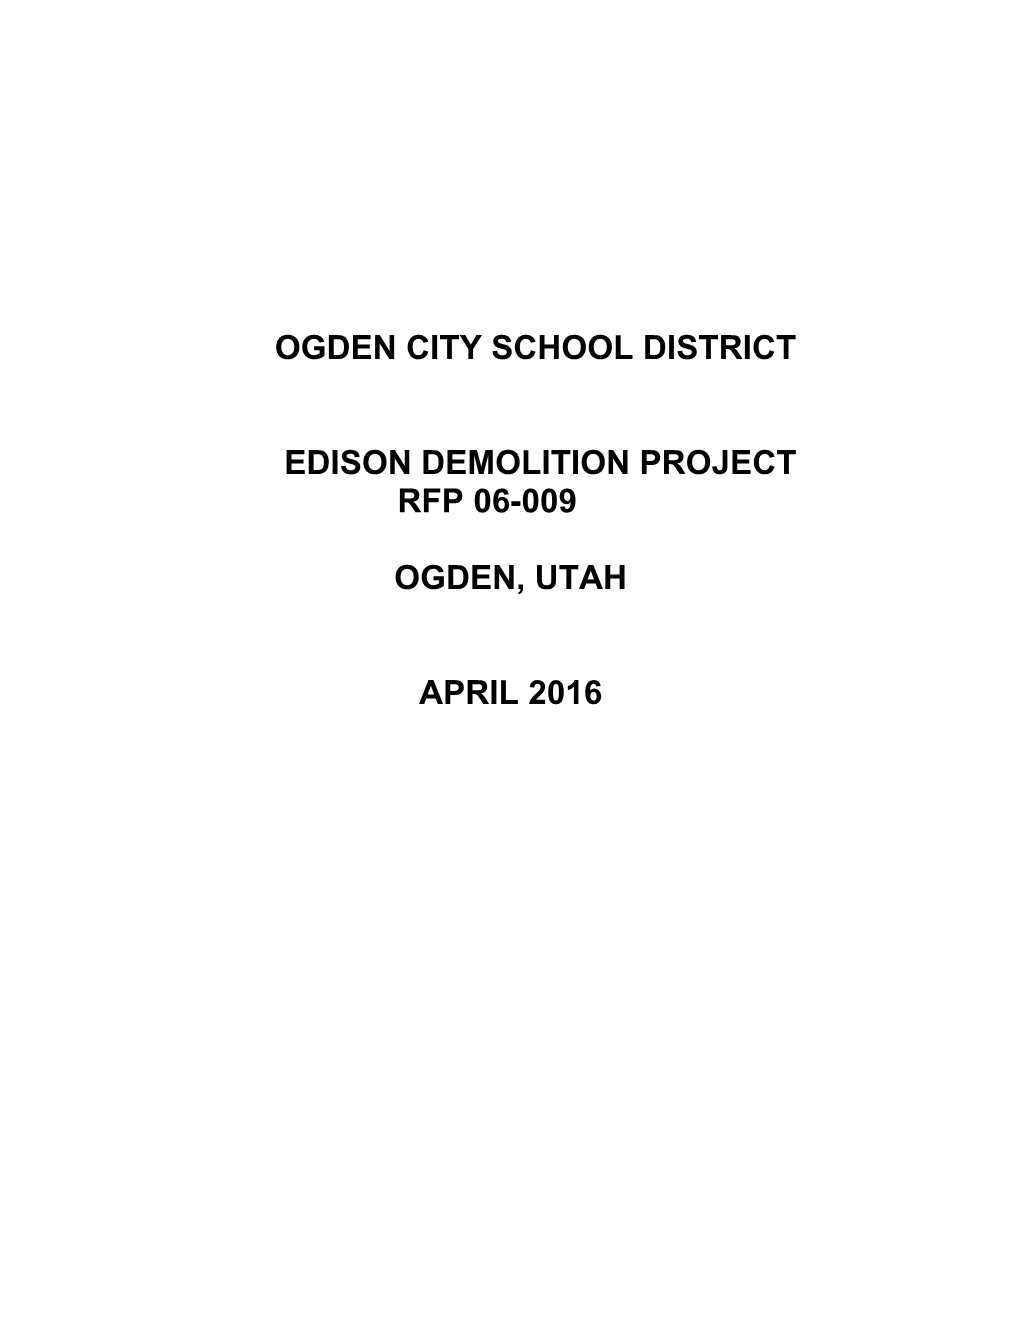 Ogden City School District s1